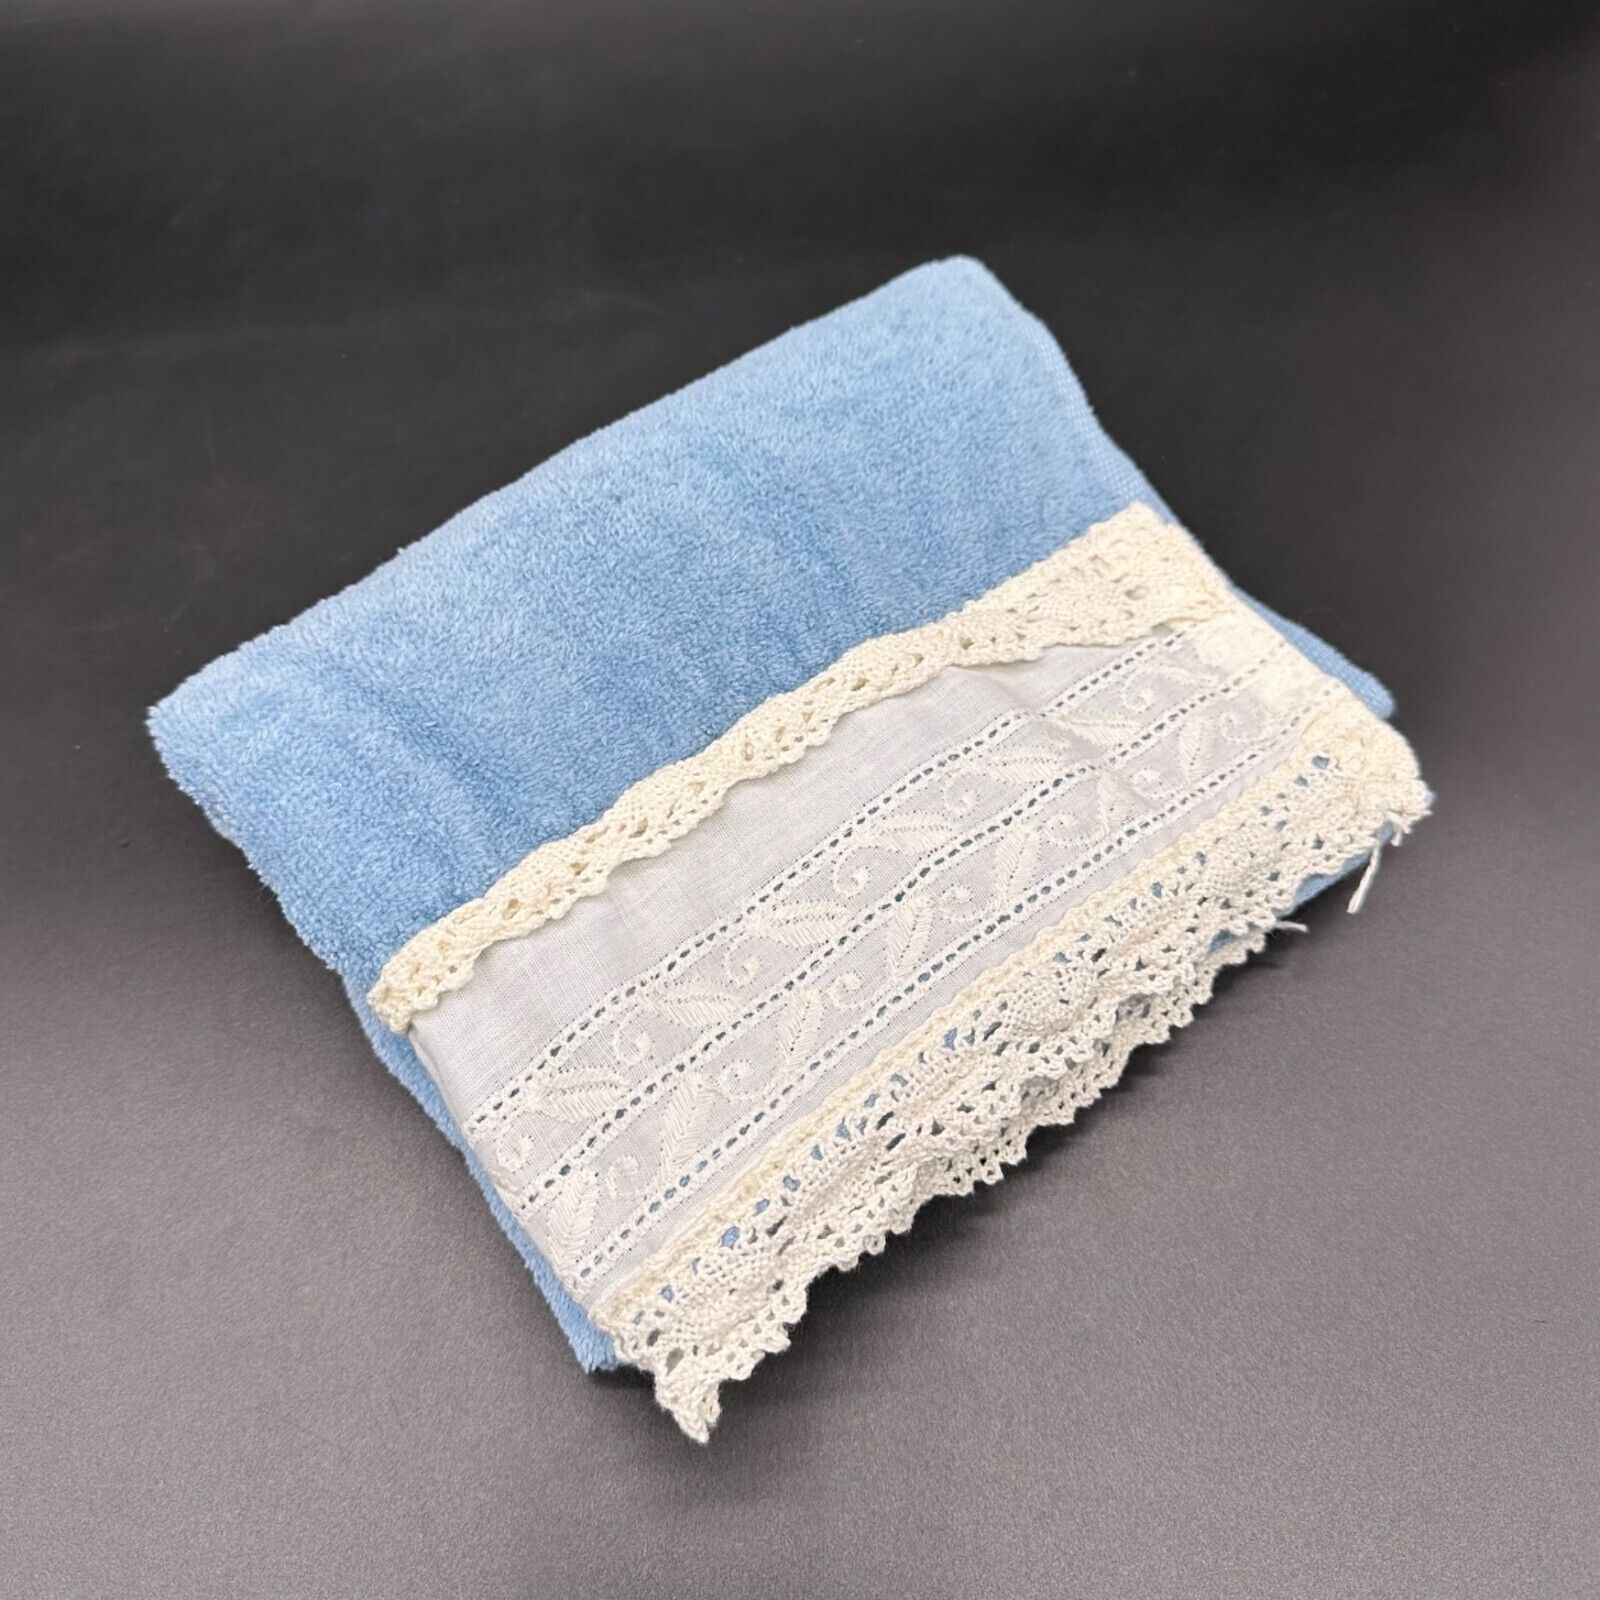 Vintage Hand Towel Blue Cream Lace 1978 Grand Prix by Avanti USA Cotton Bathroom